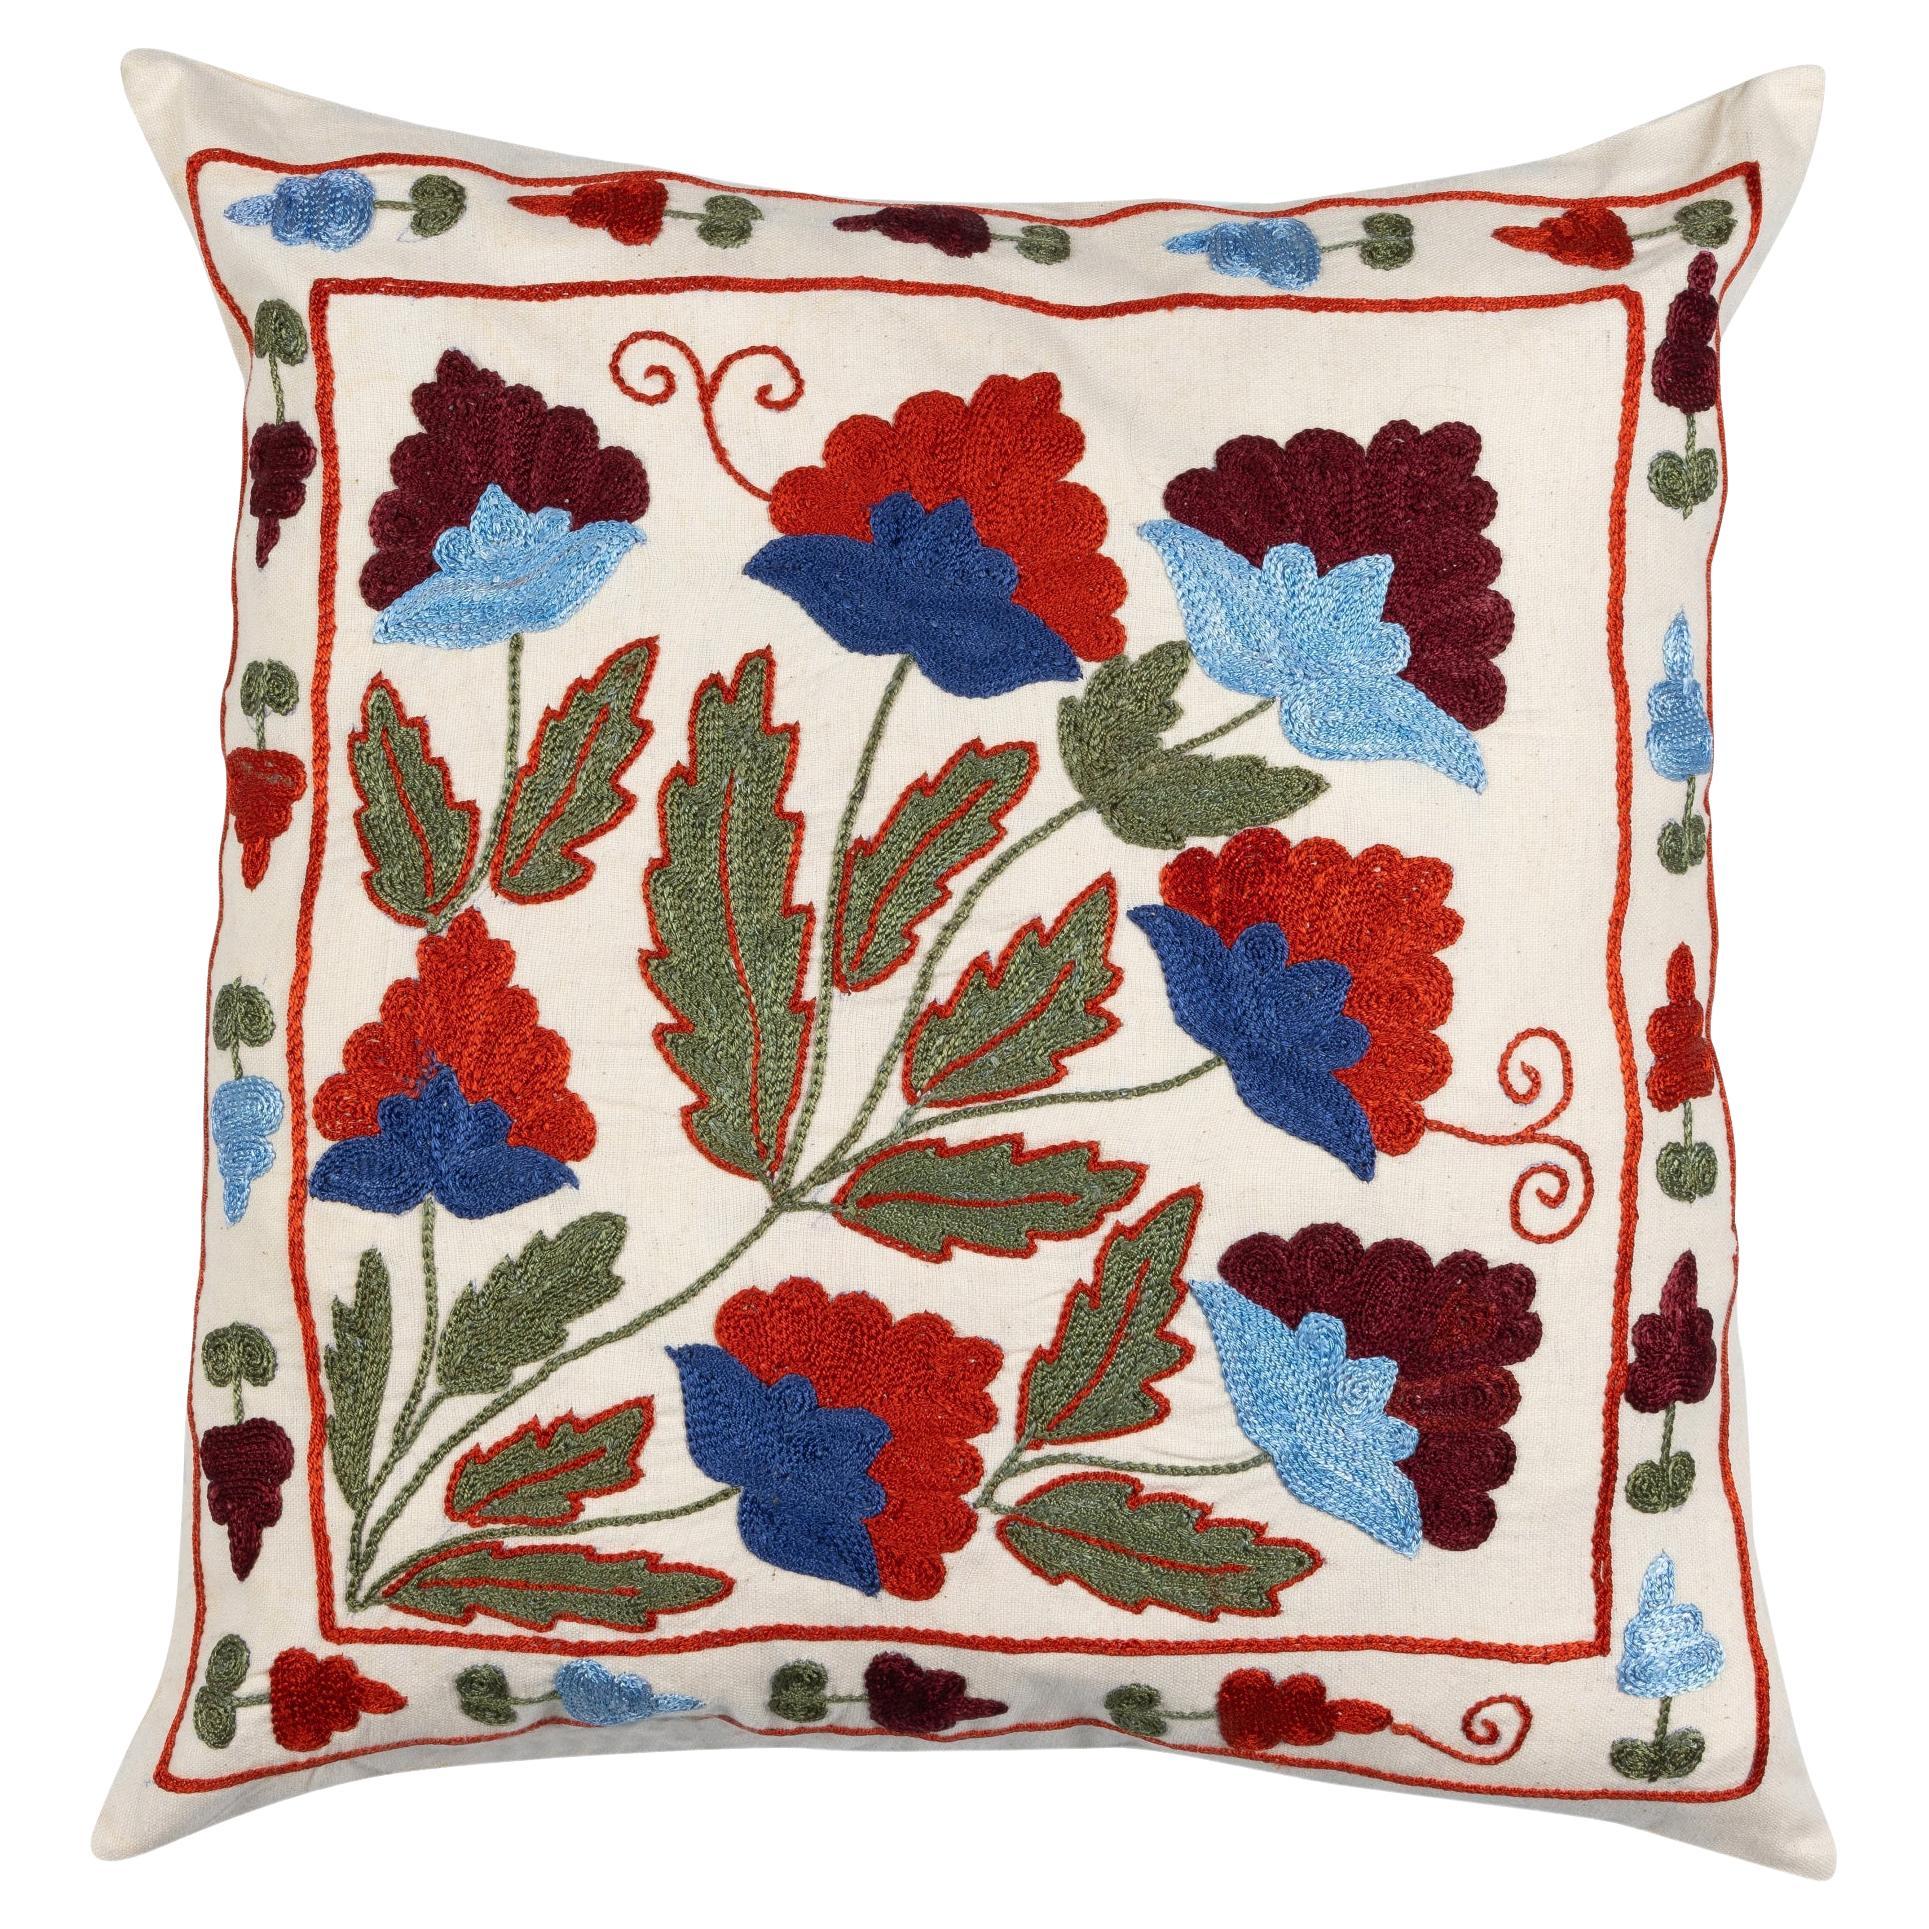 17"x17" Decorative Silk Hand Embroidered Suzani Cushion Cover from Uzbekistan